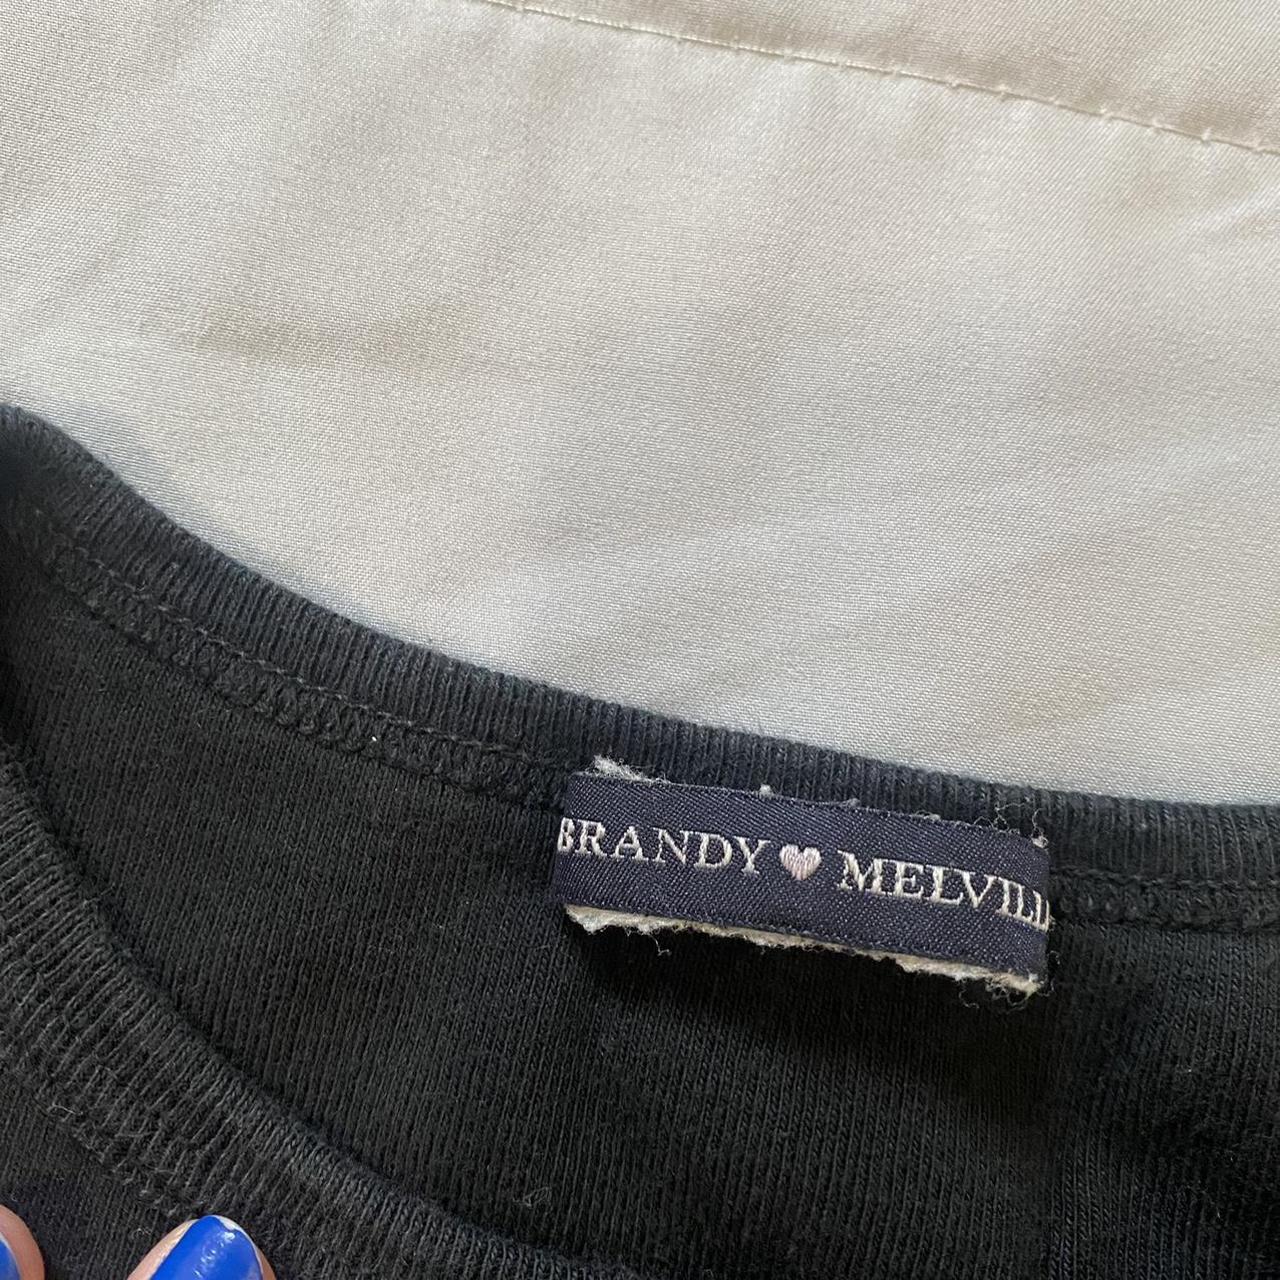 Brandy Melville lace shirt, Super cute and - Depop